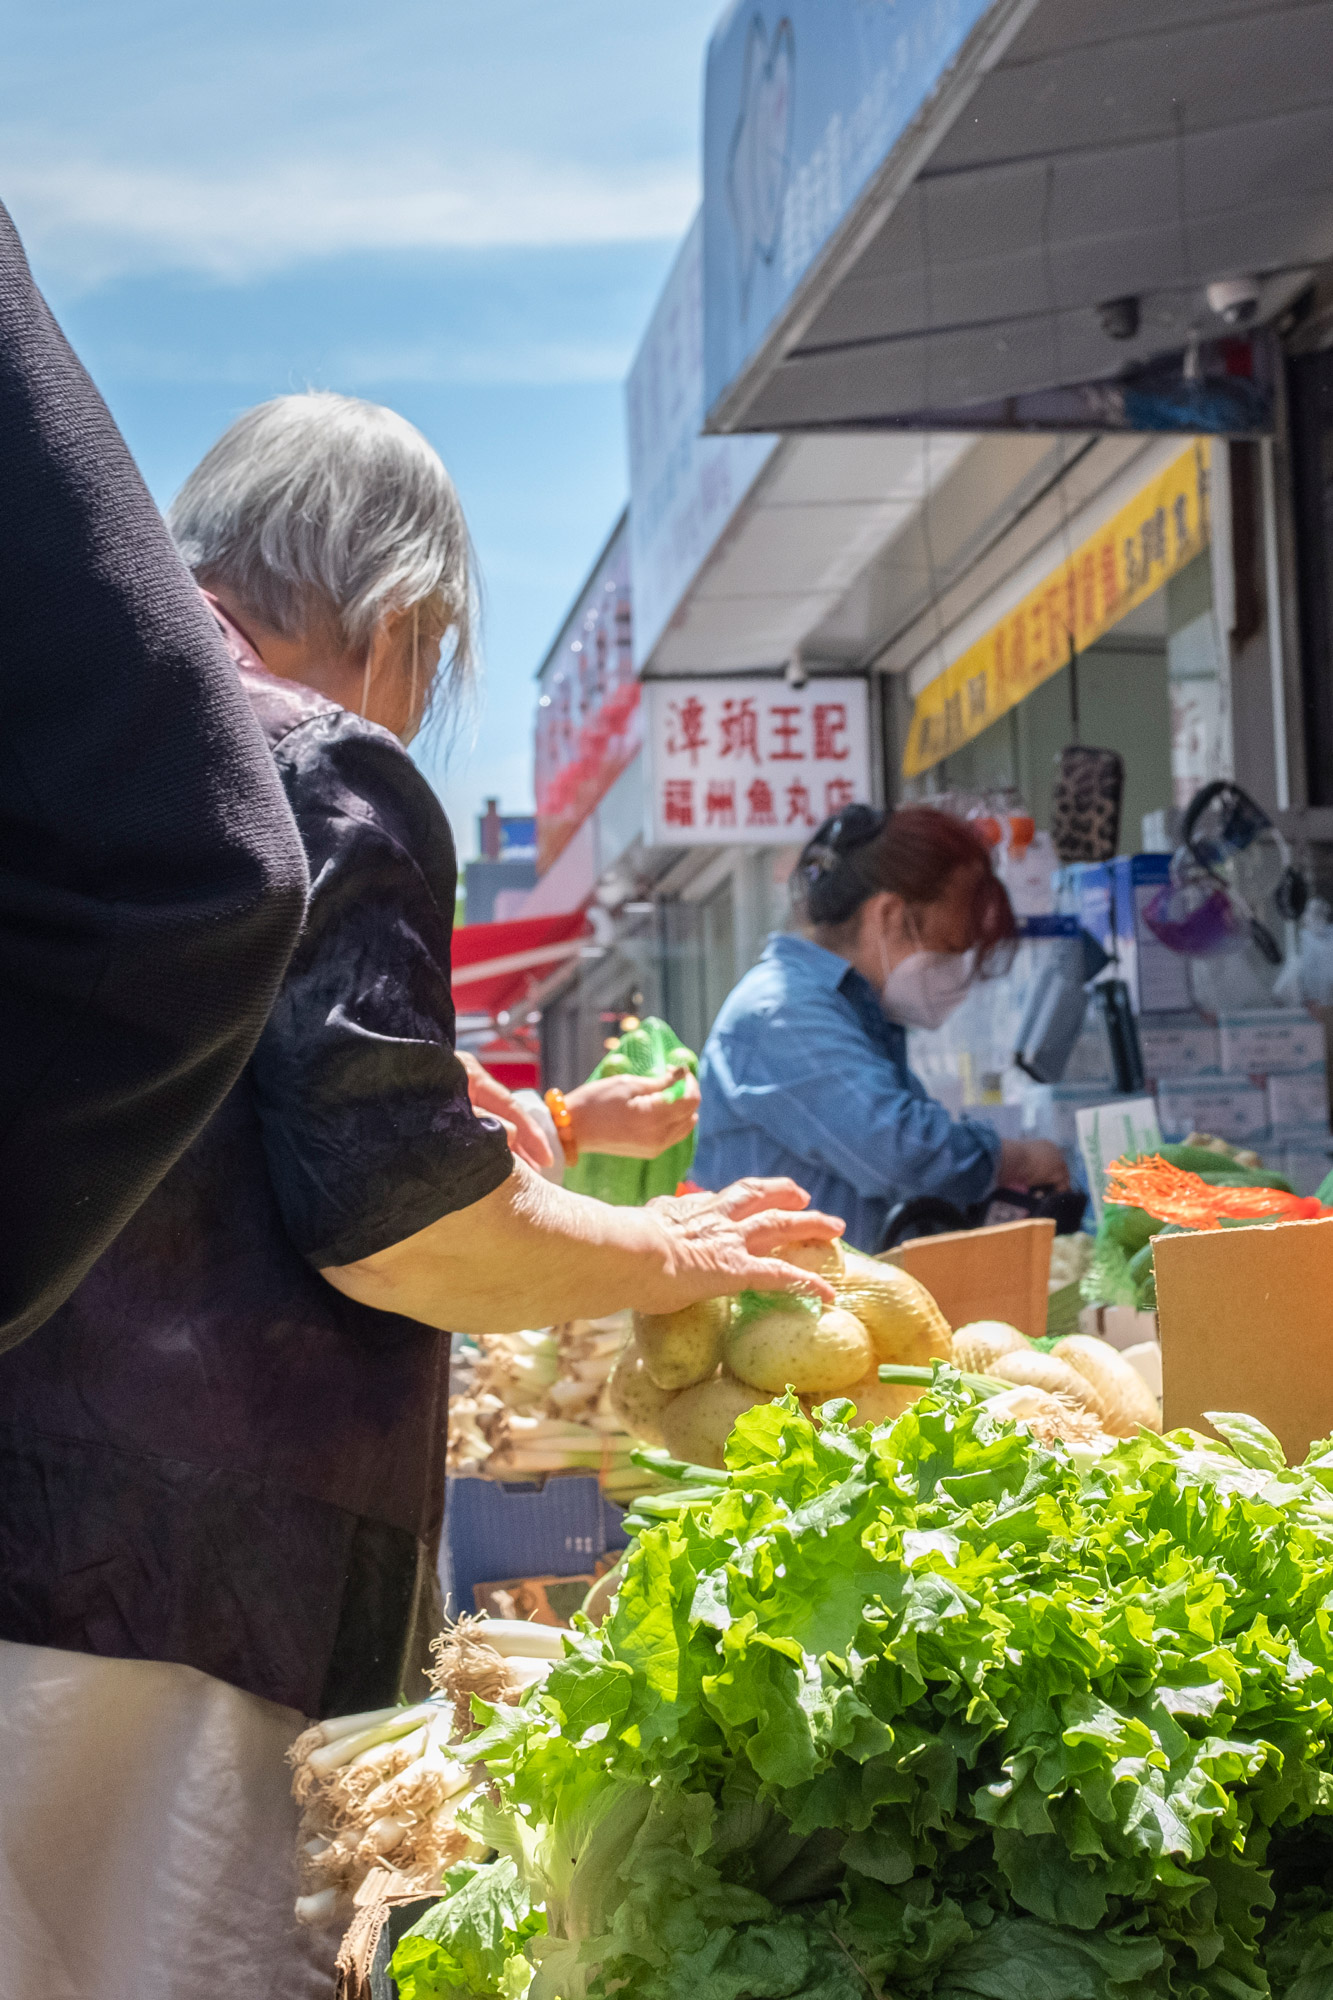 Elderly woman picks produce at an outdoor market